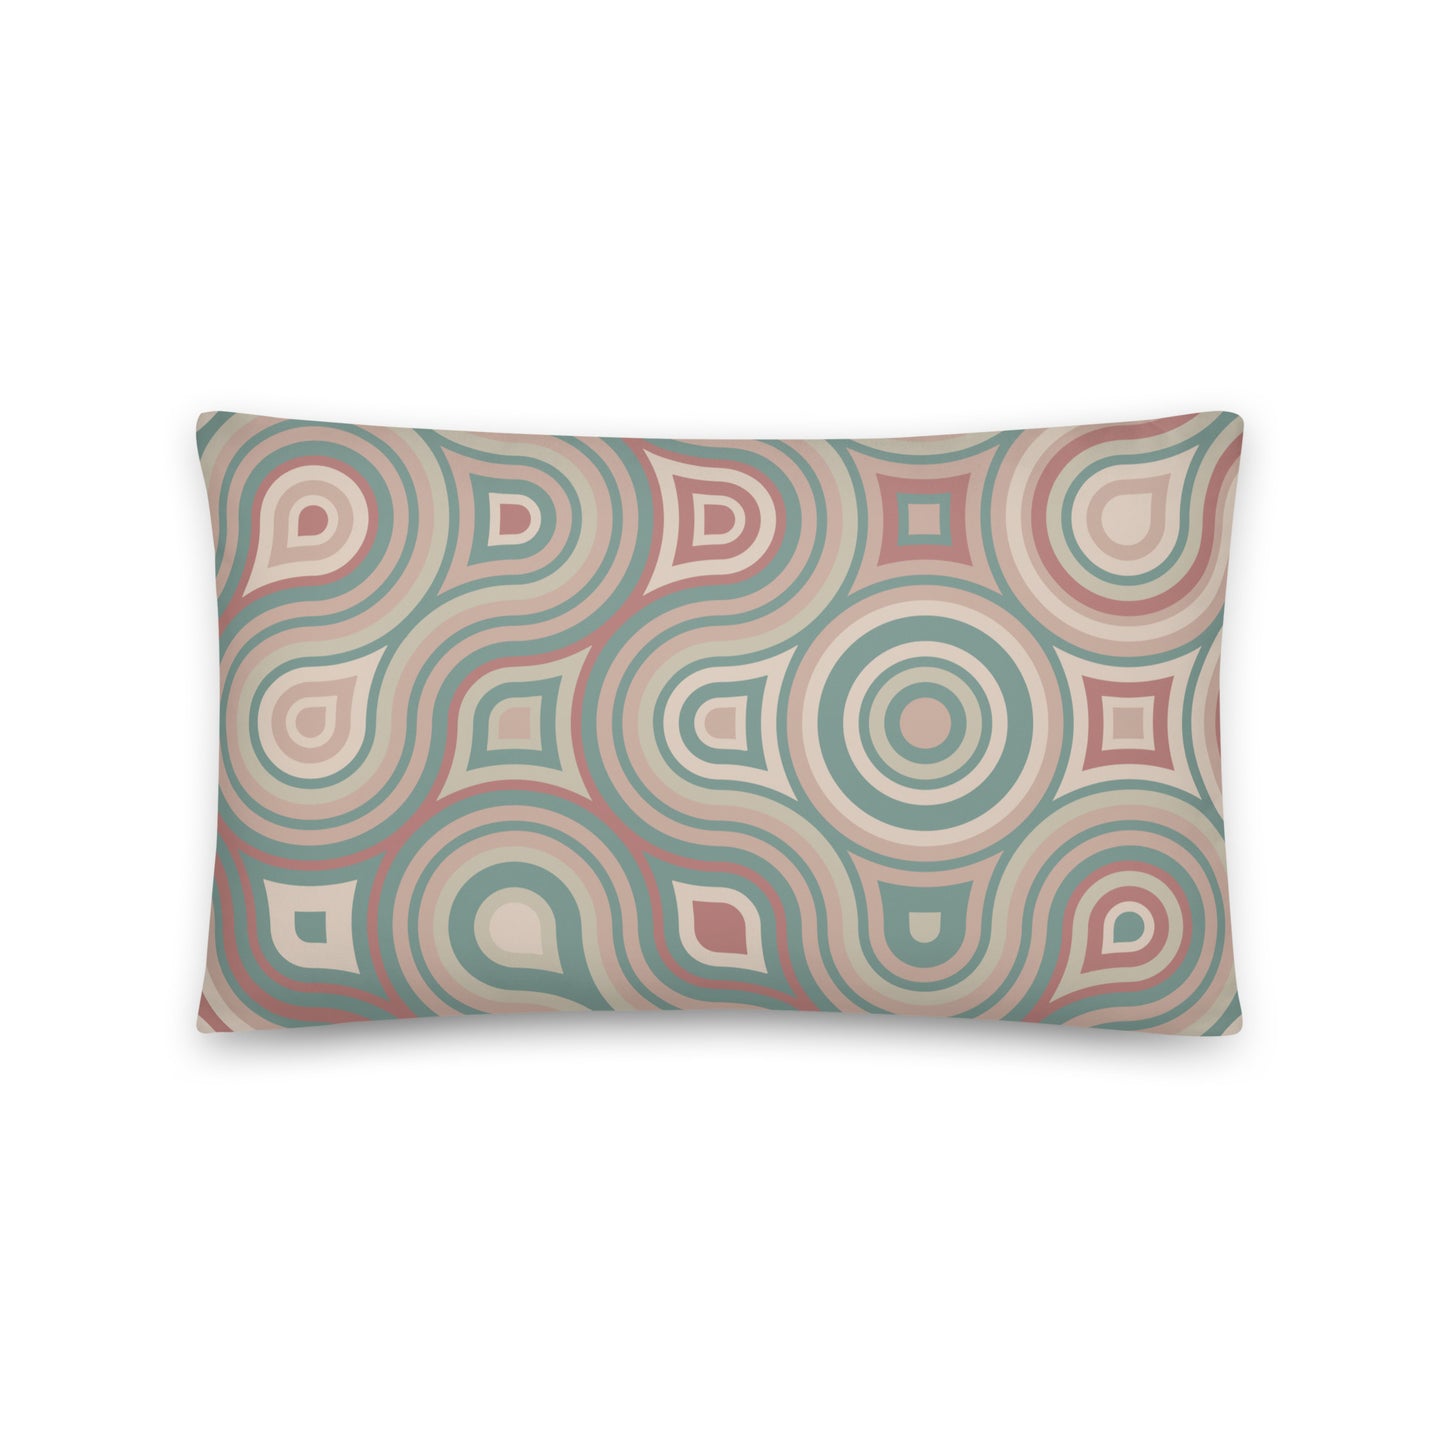 Circular - Sustainably Made Pillows